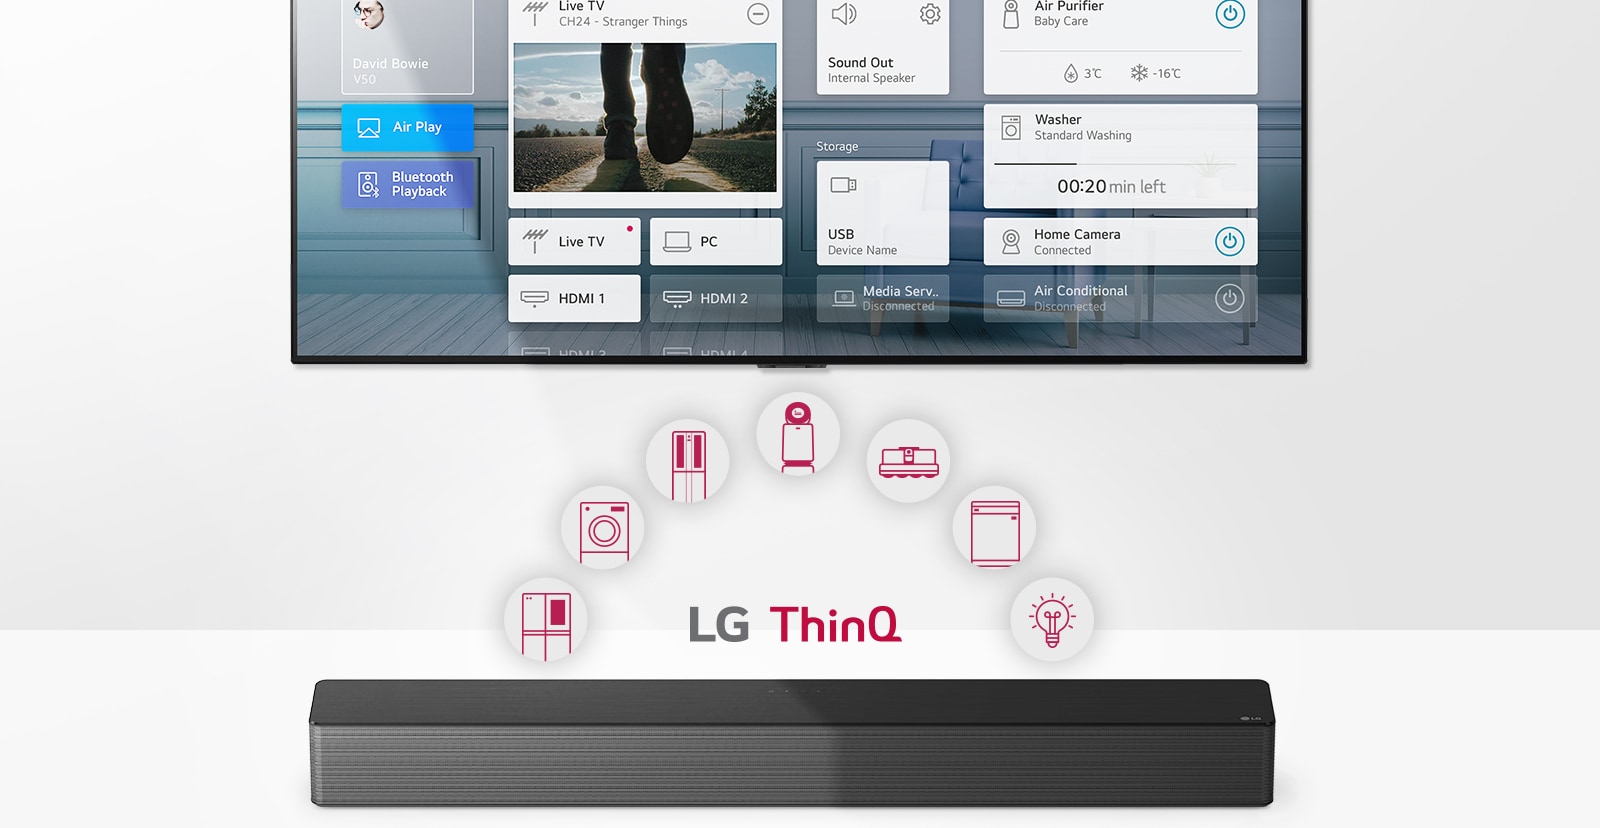 Conoce más sobre LG Electronics: LG SNH5 